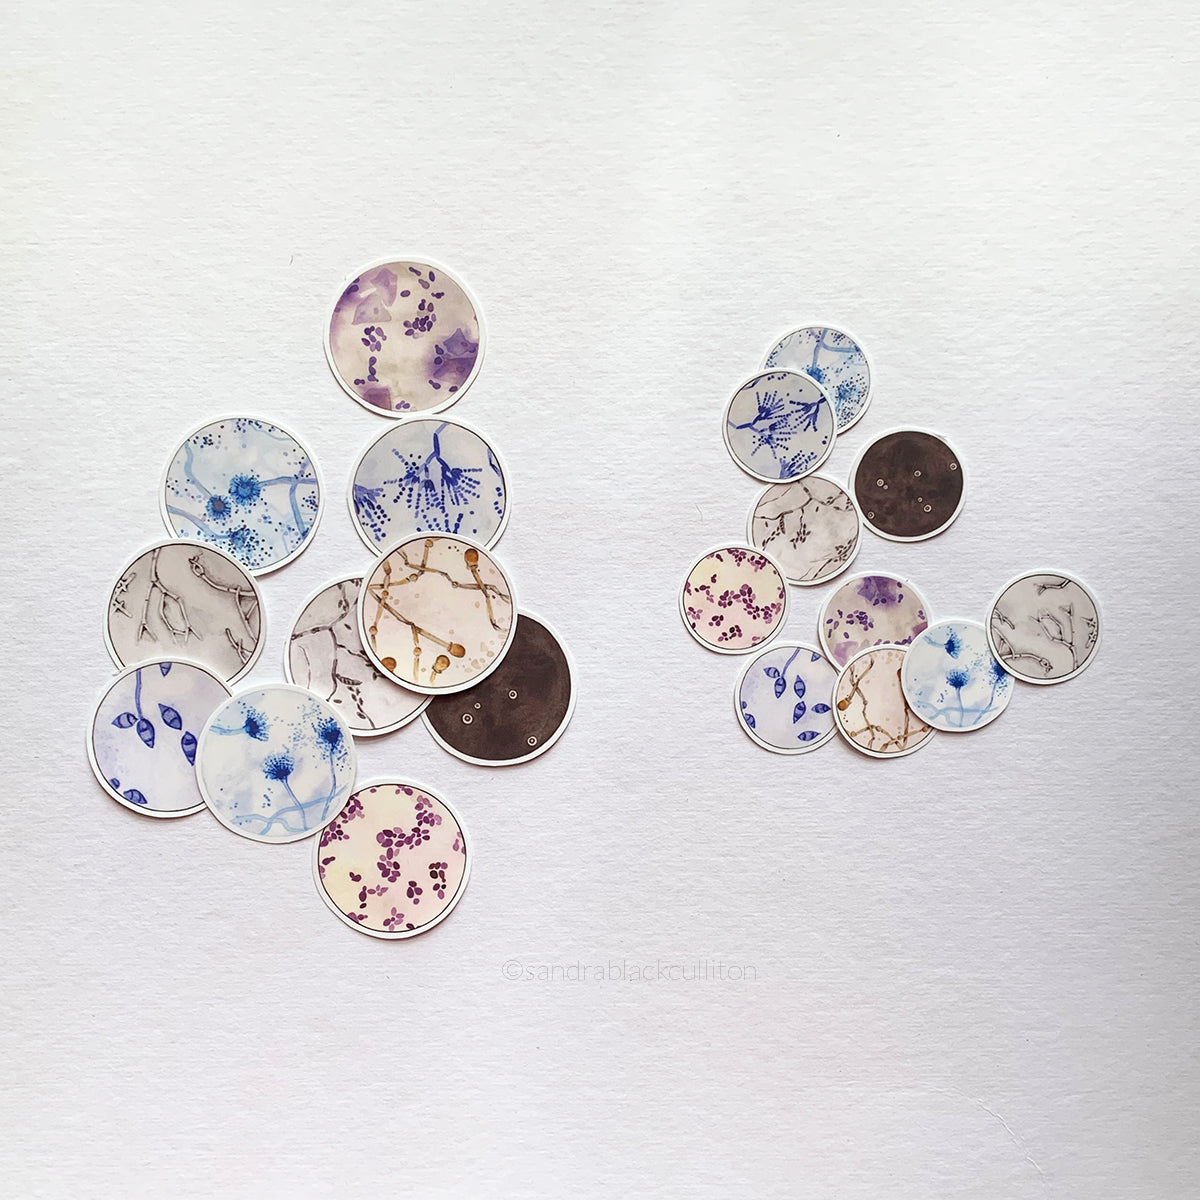 Fungi Stickers - Sandra Black Culliton